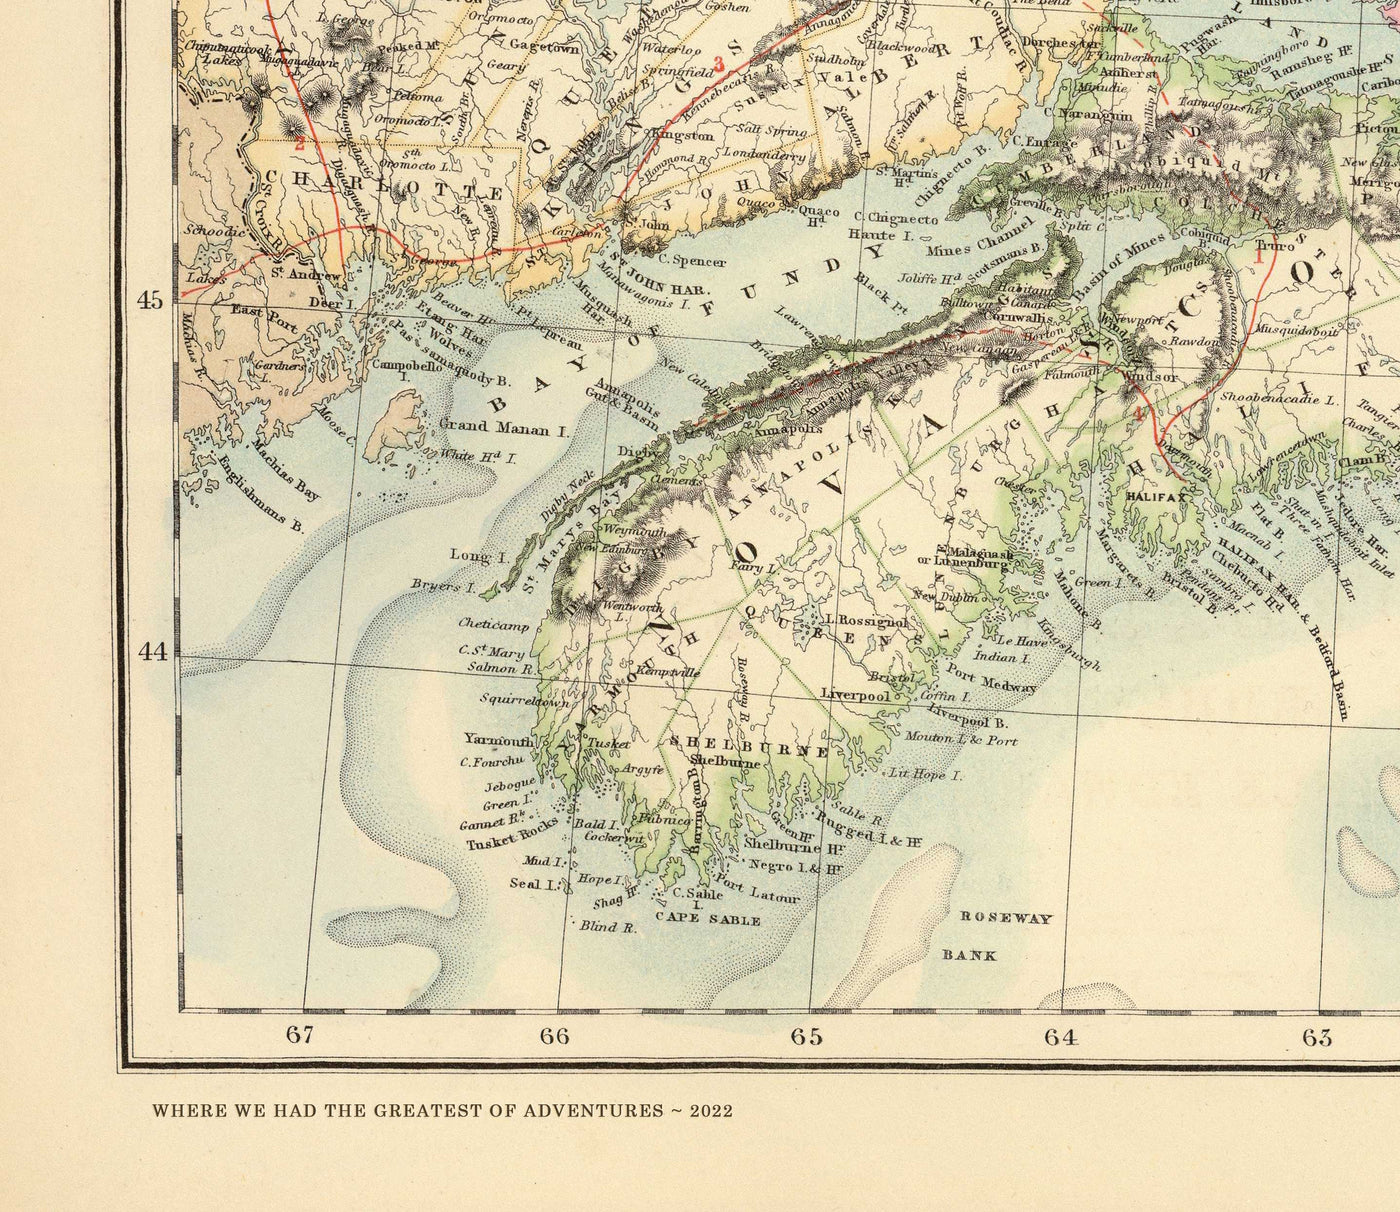 Antiguo mapa de los puertos del sureste de Inglaterra, 1872 por Fullarton - Margate, Dover, Falmouth, Folkestone, Portsmouth